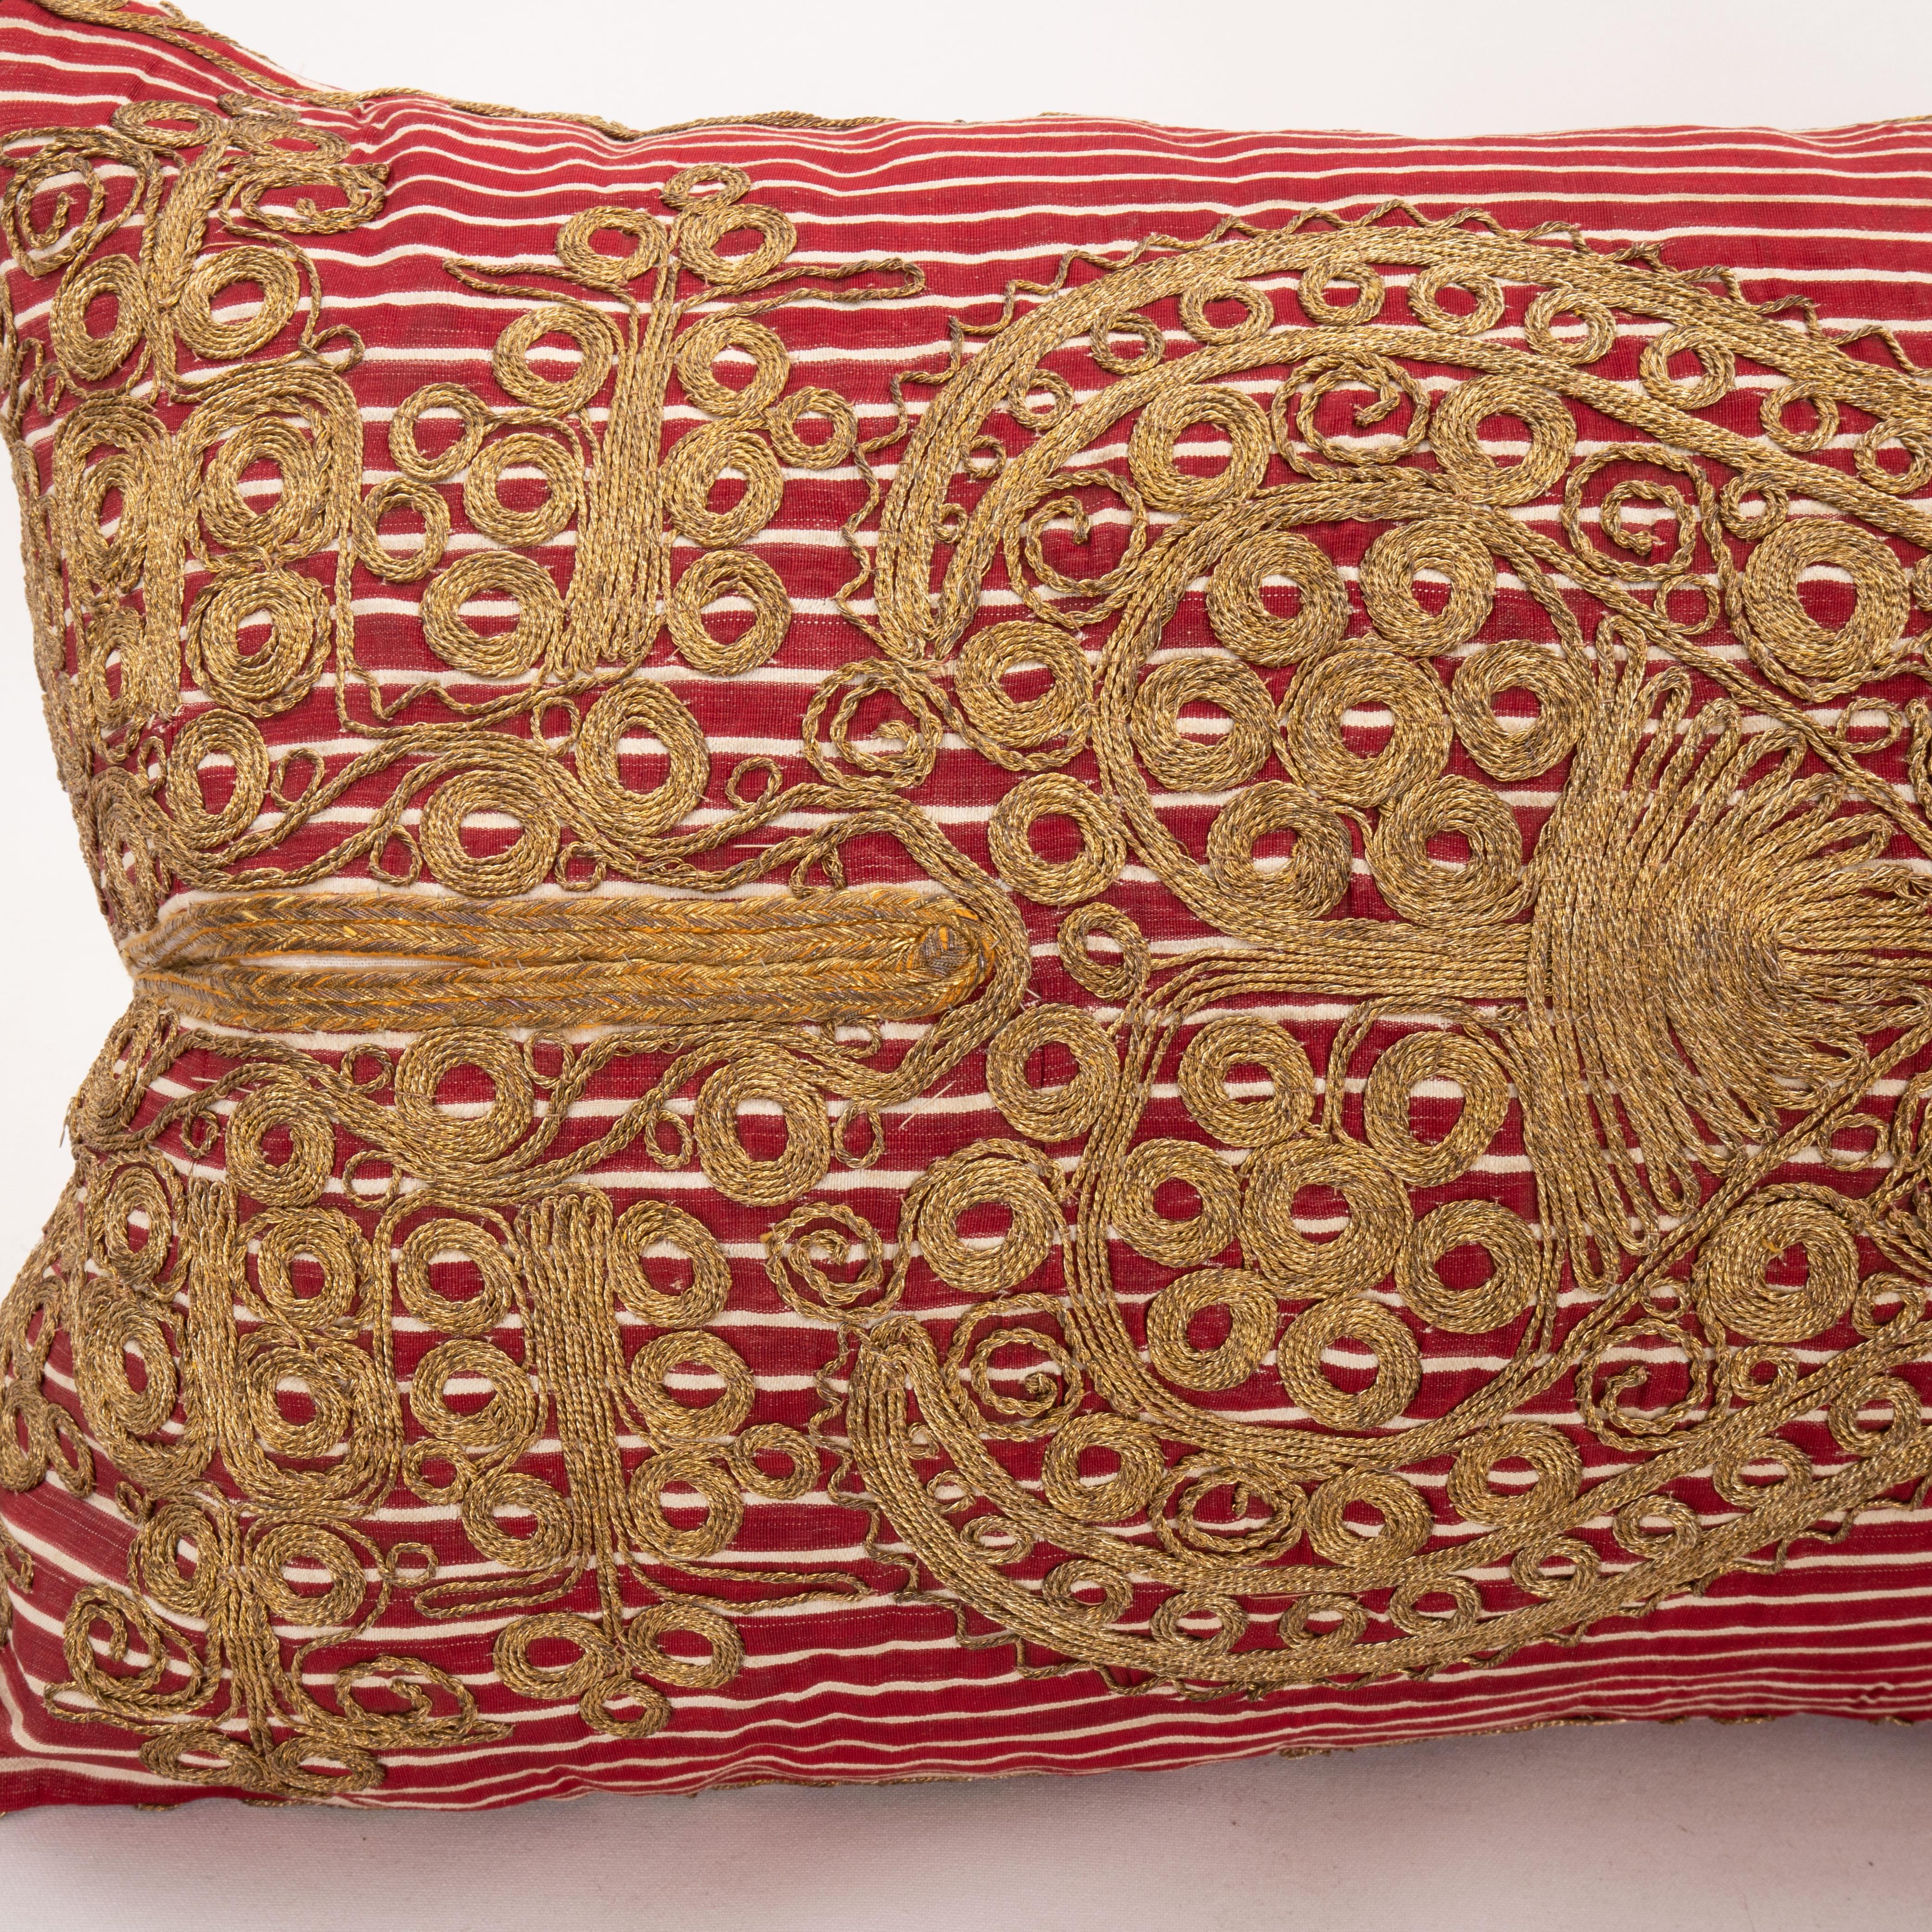 Folk Art Antique Ottoman Turkish Pillow Case, Early 20th C.